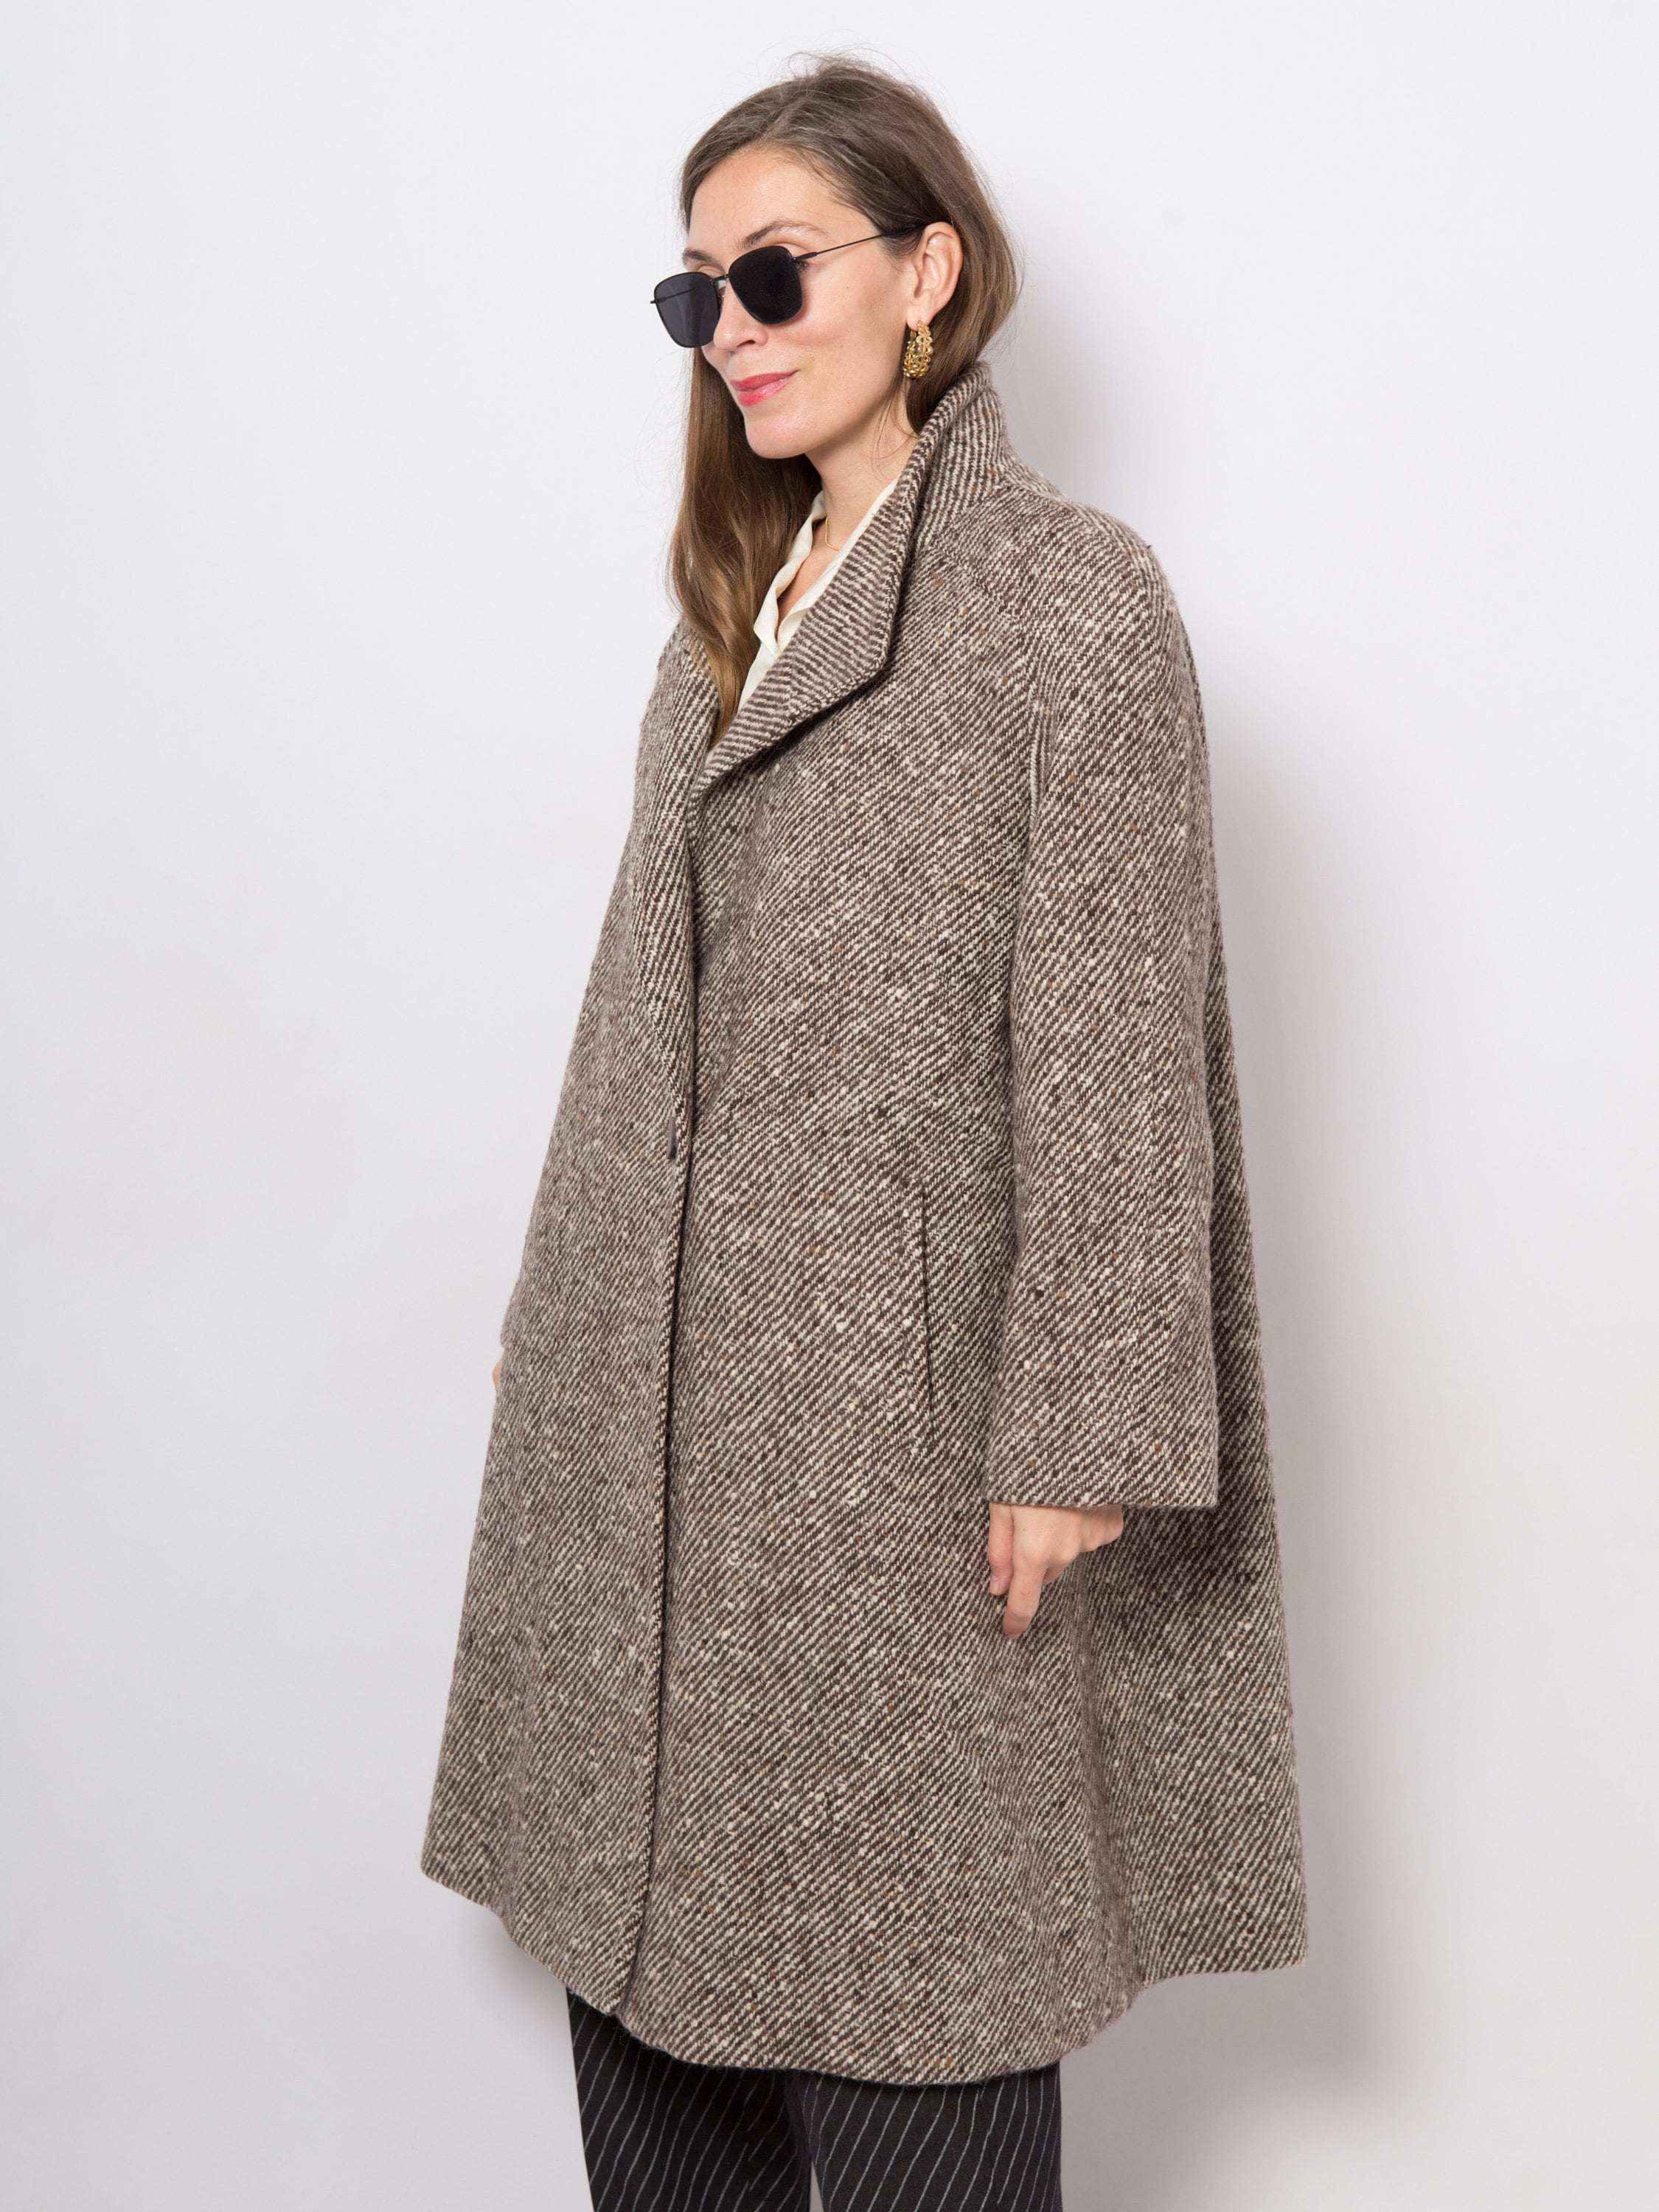 Herringbone Coat Swing Coat Brown Wool Coat Tweed Overcoat | Etsy